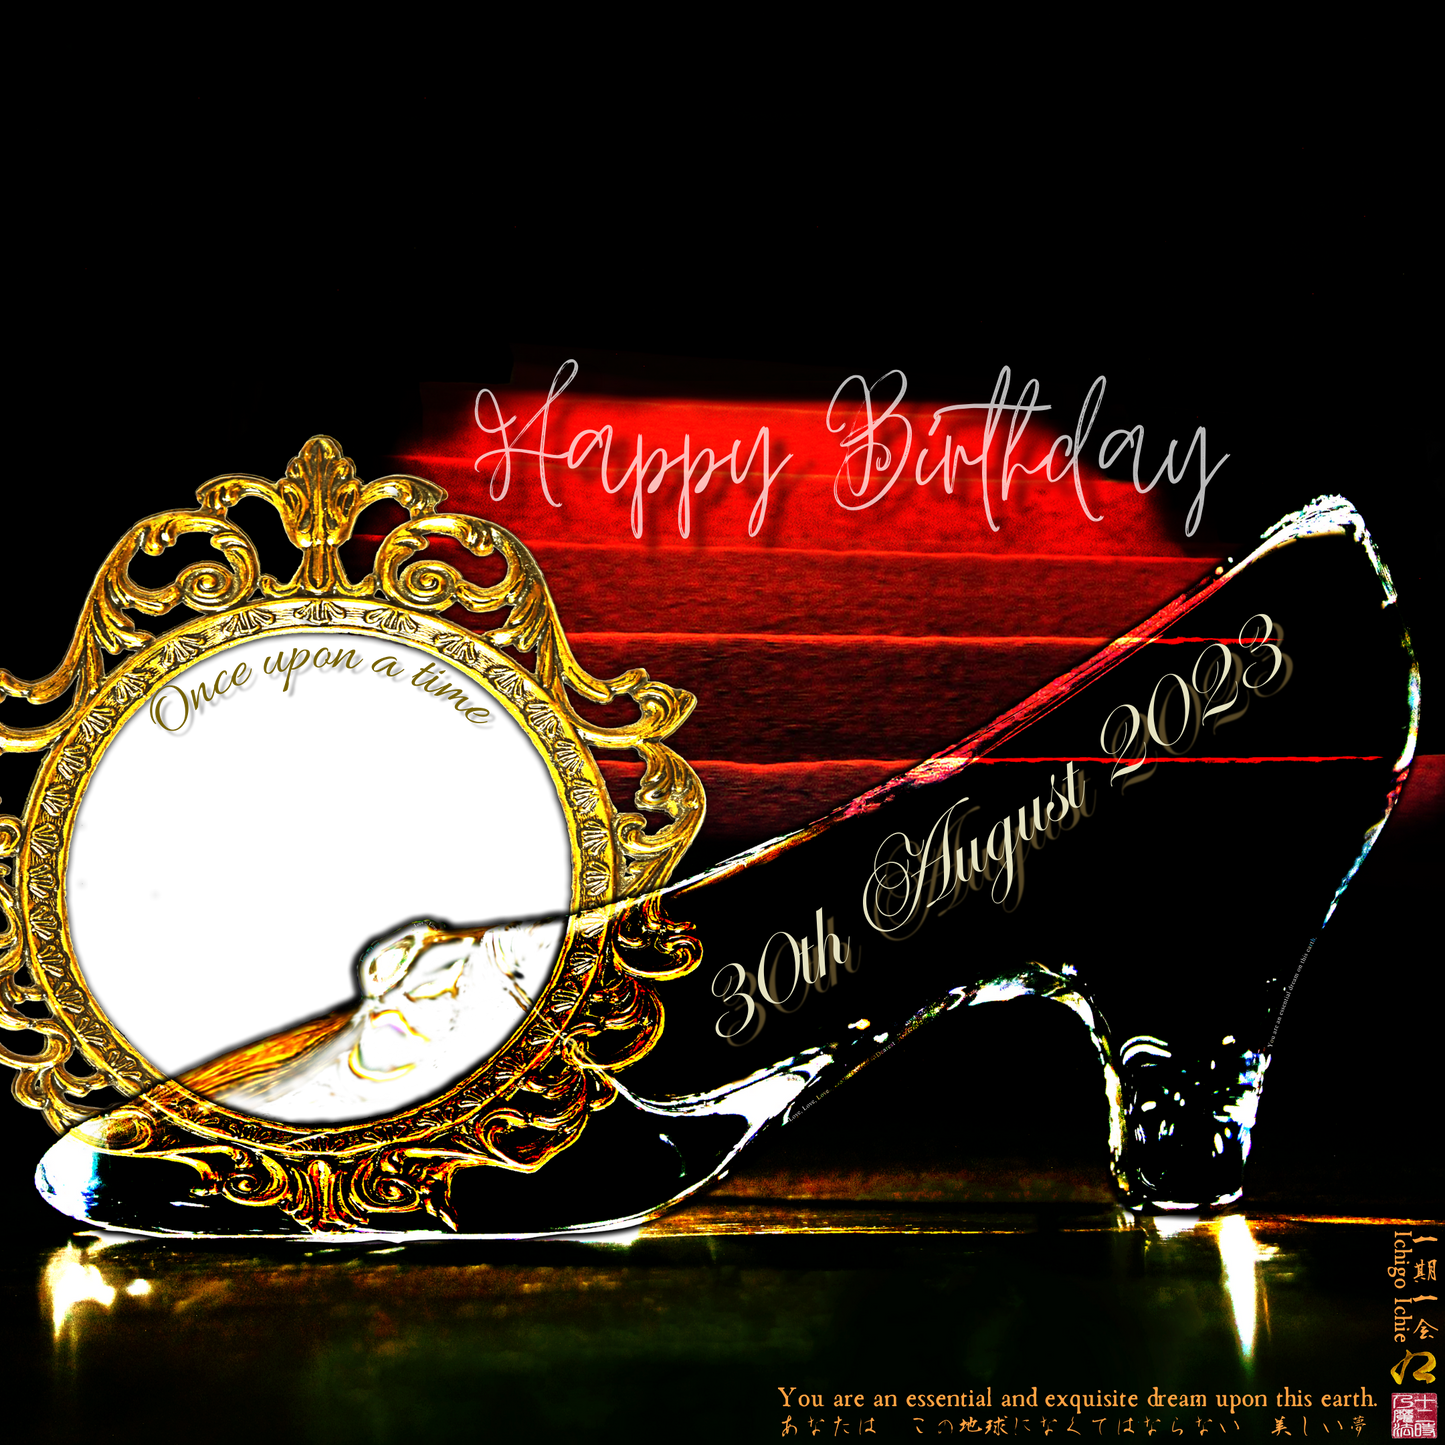 Happy Birthday Glass Slipper "Ichigo Ichie" 30th August 2023 the Left (1-of-1) NFT Art